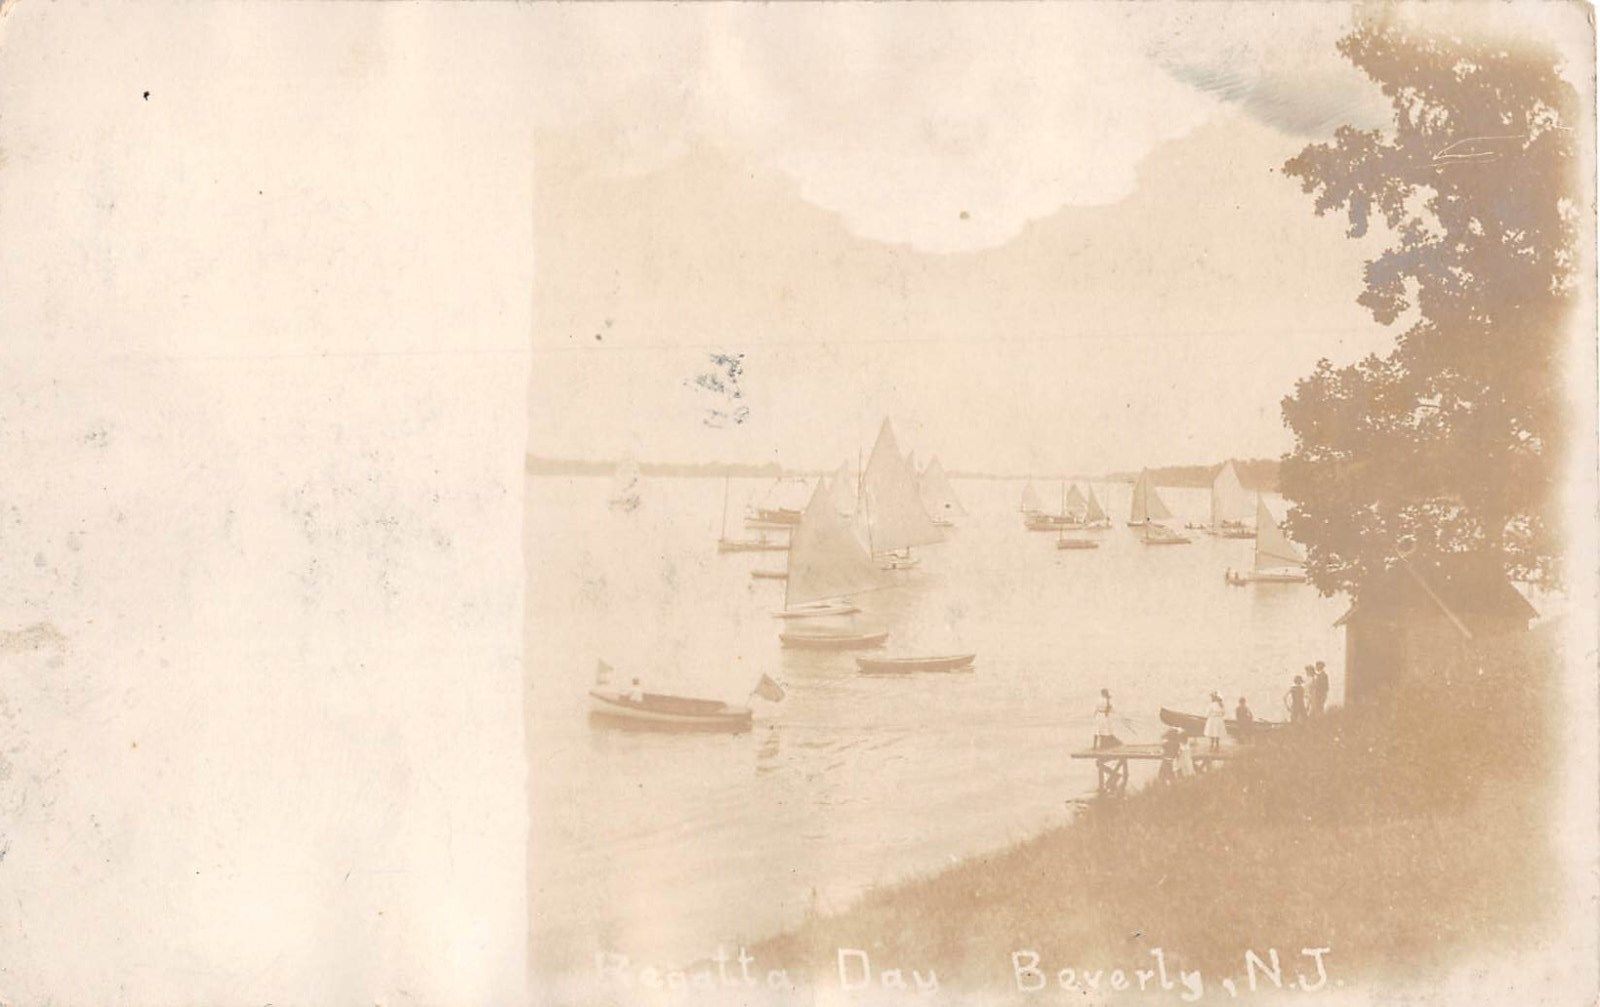 Beverly - Sailboats near shore on Regatta Day - 1906